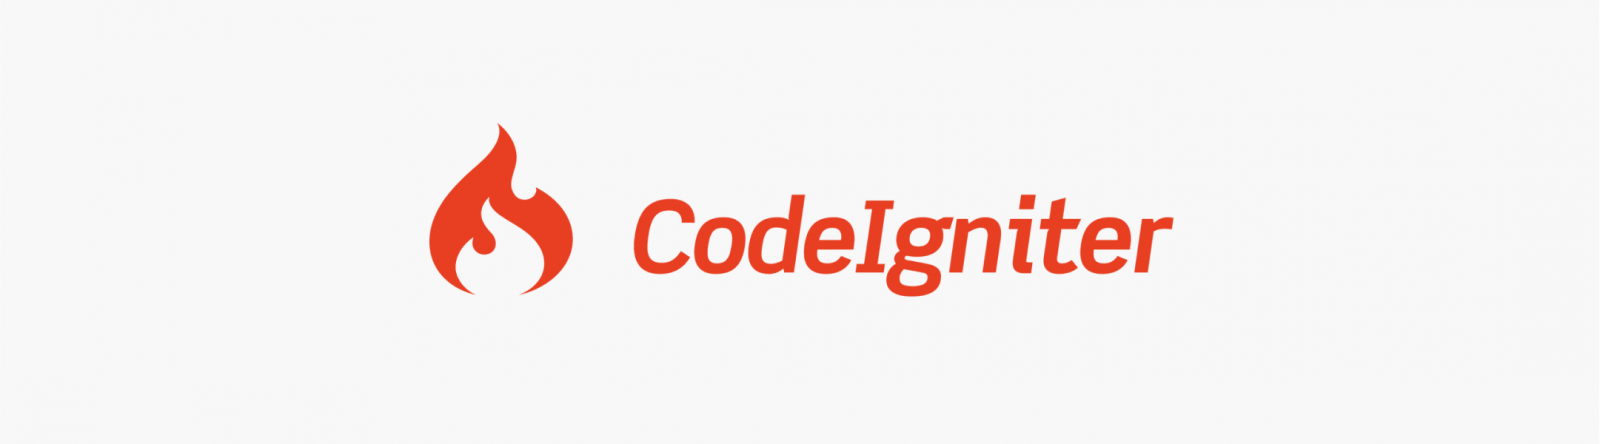 CodeIgniter programming services